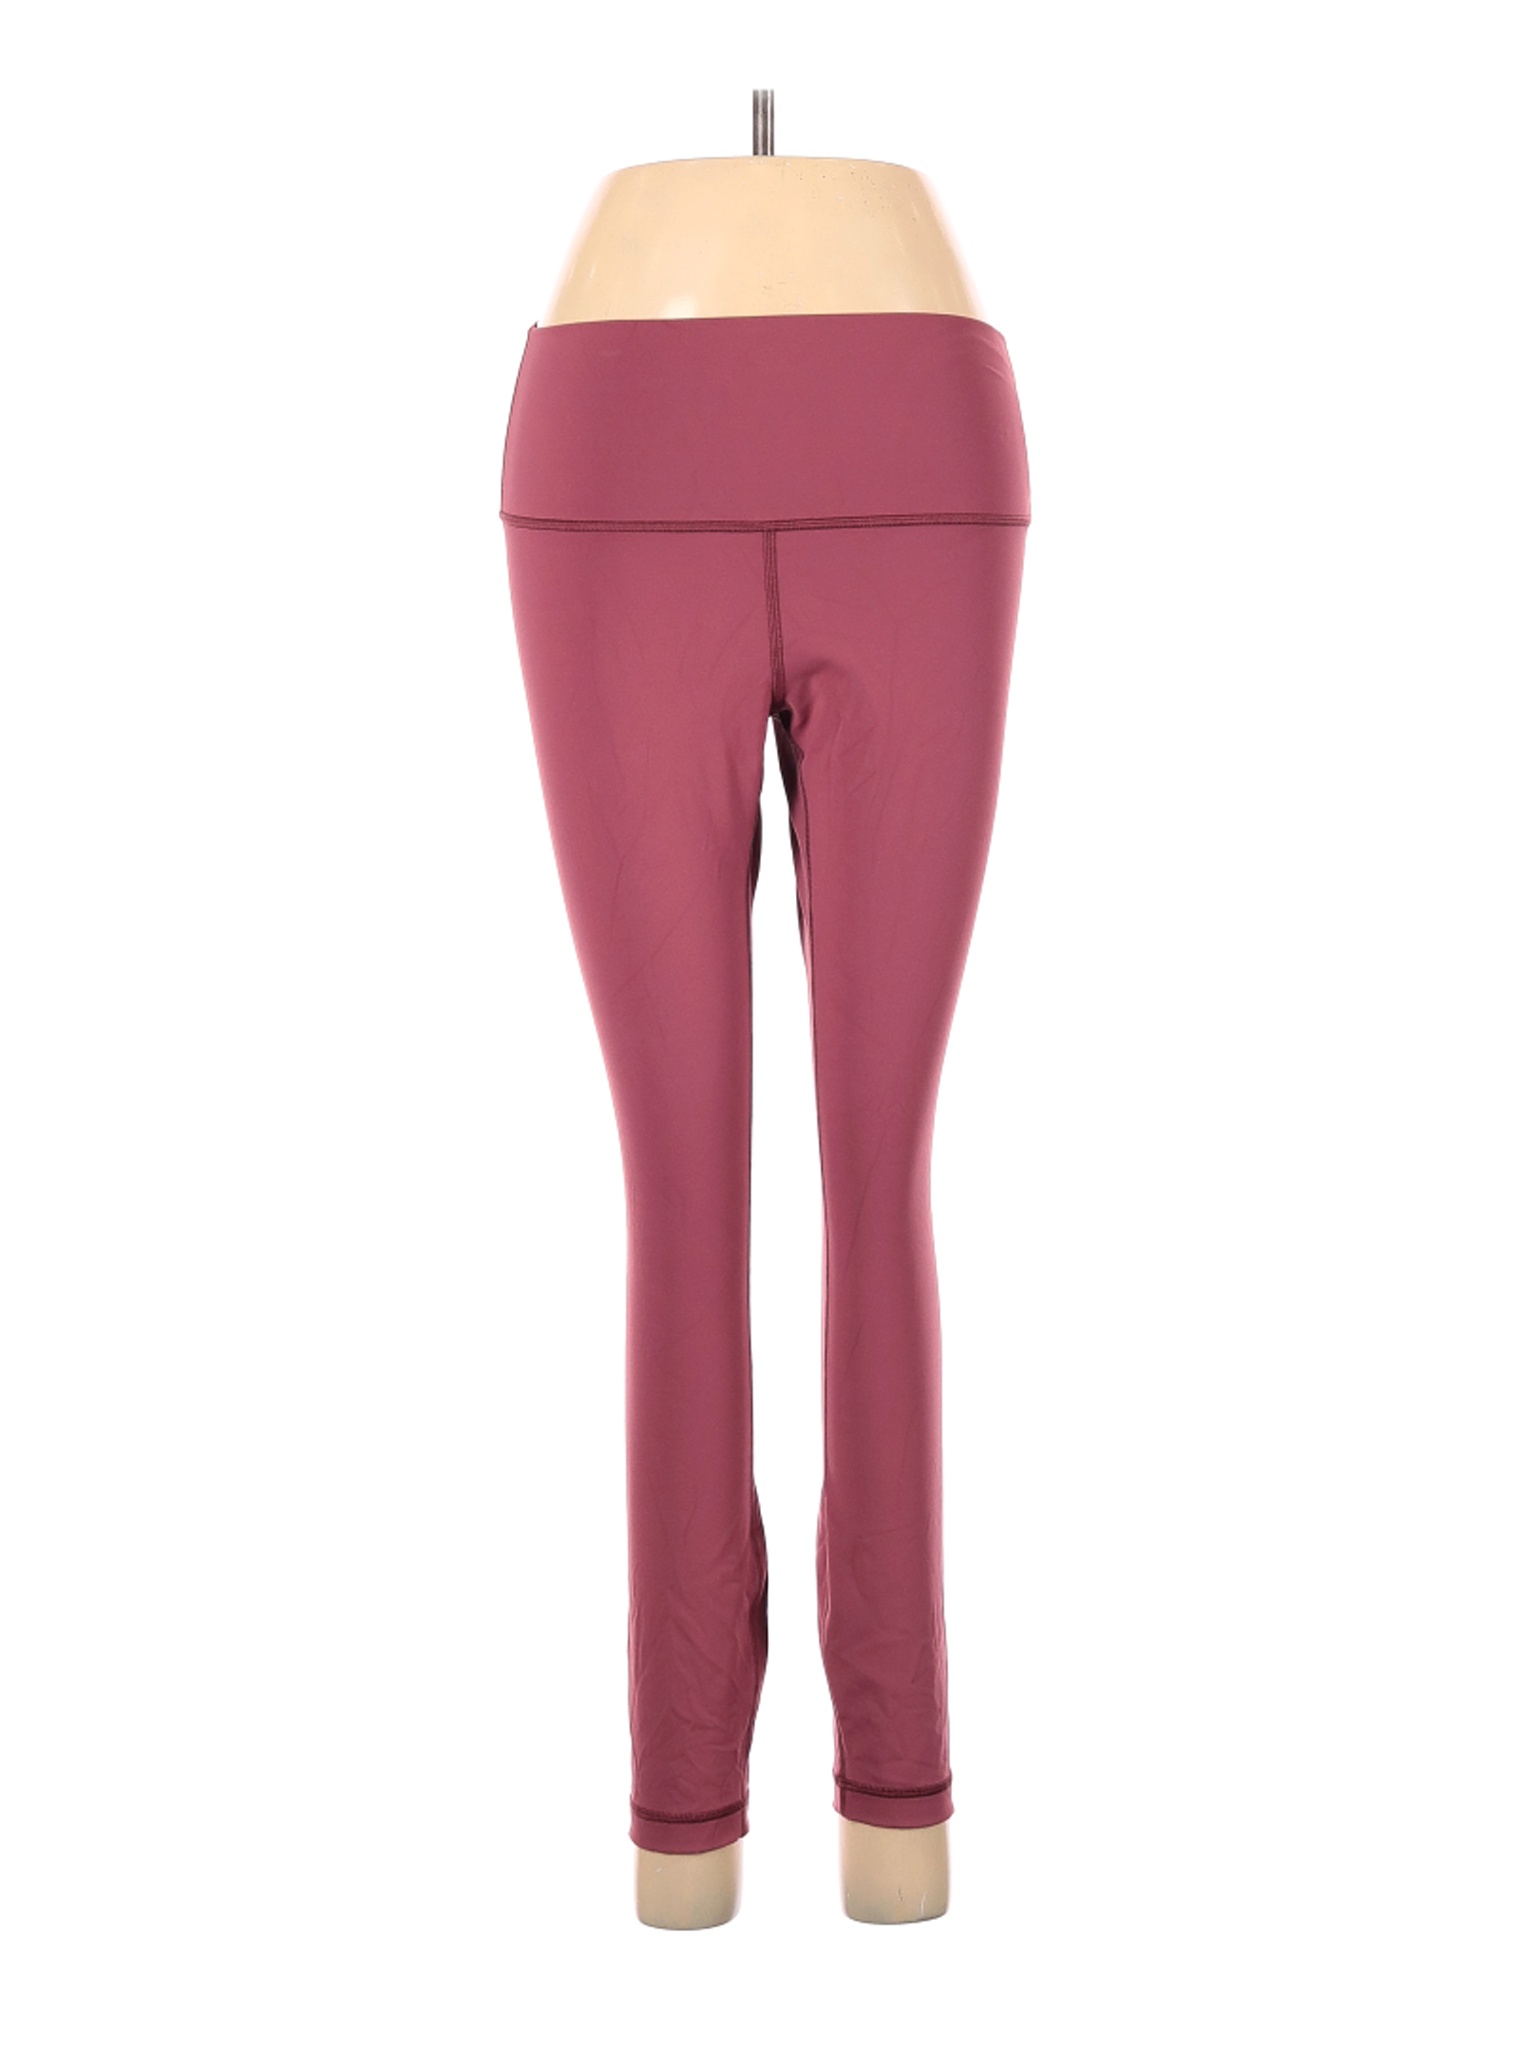 Lululemon Athletica Women Purple Active Pants 8 | eBay